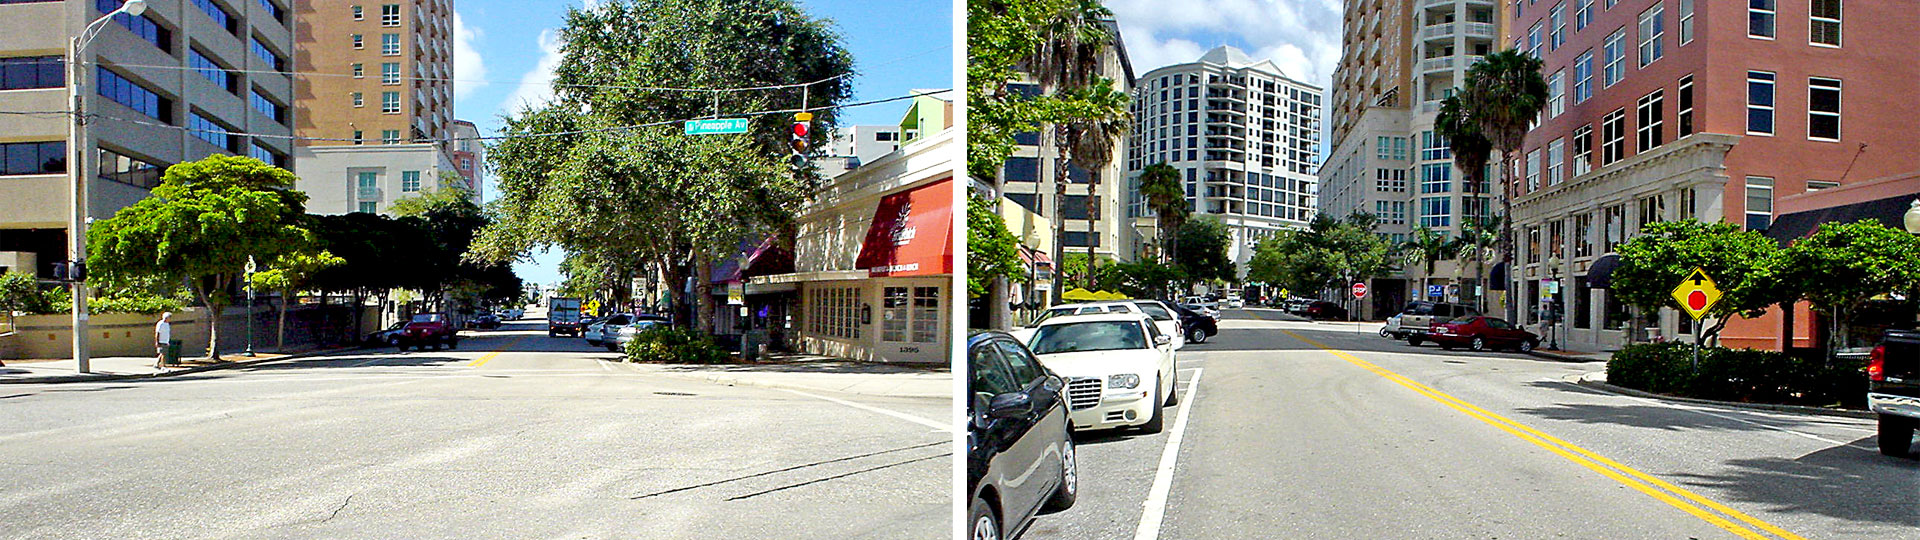 Two views of downtown Sarasota